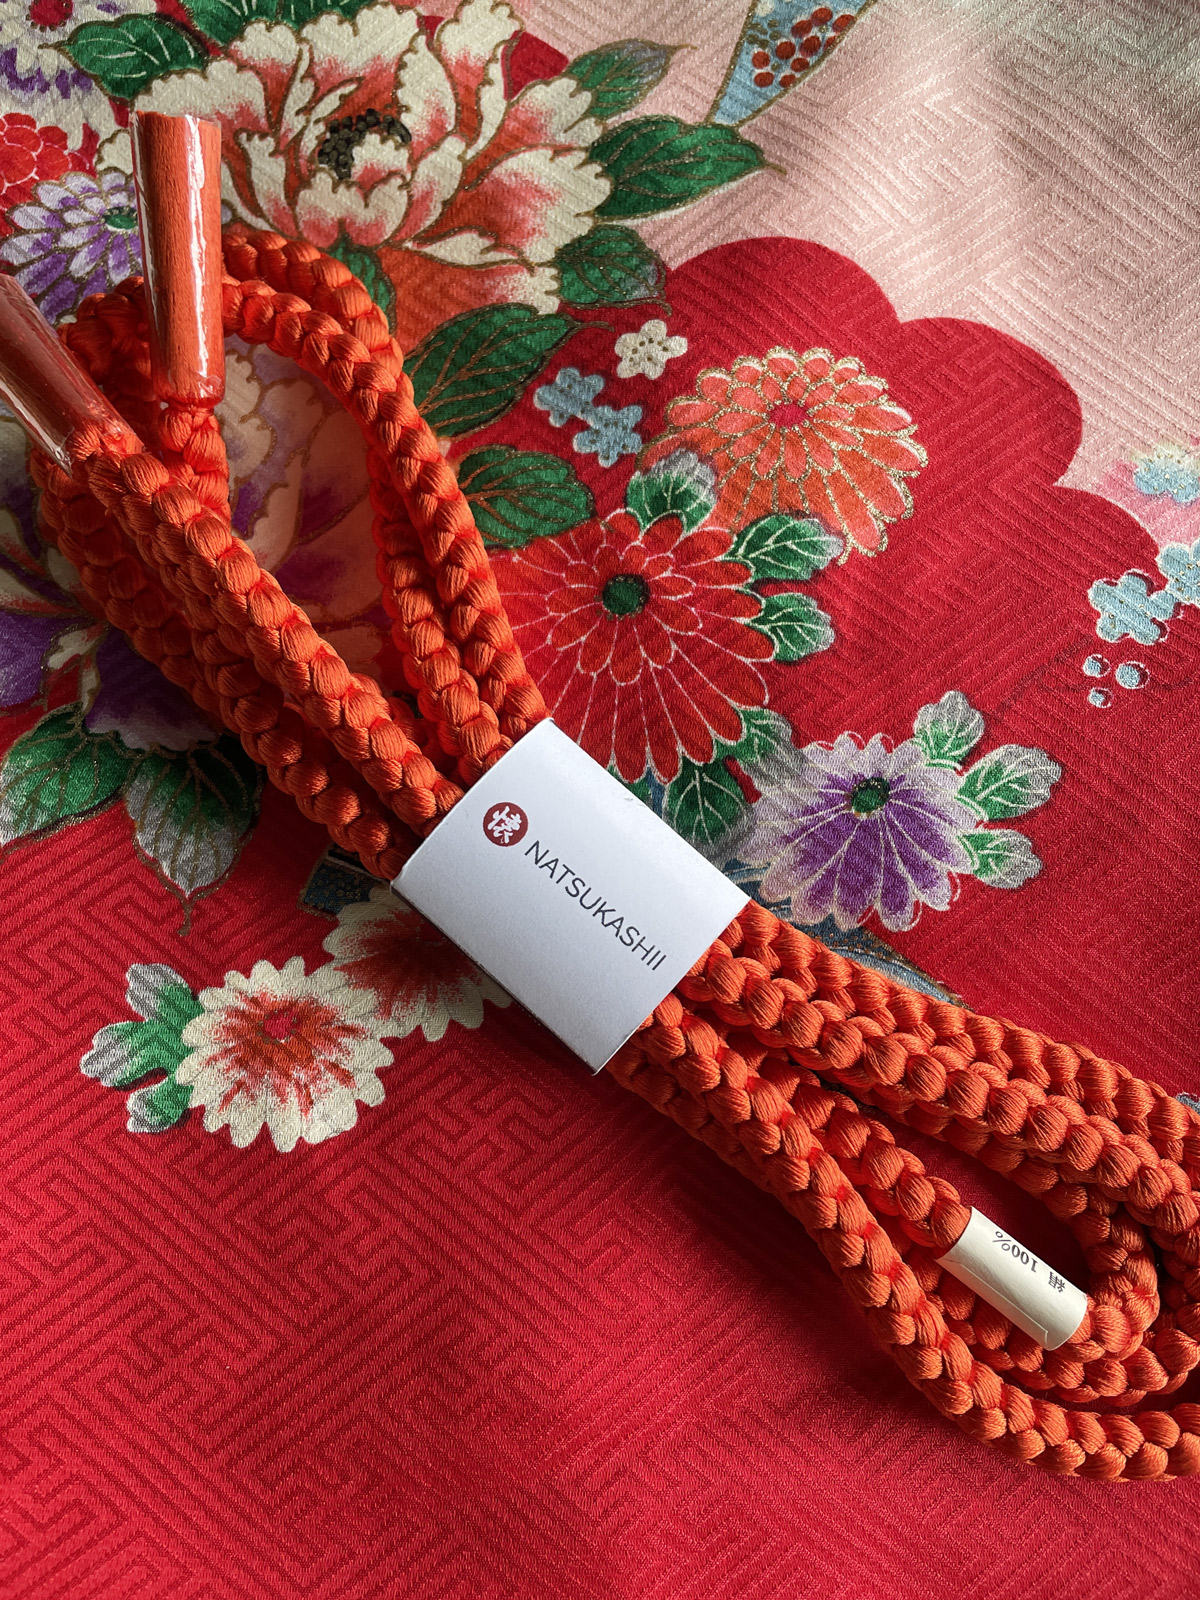 Bright orange-red (unused) Obijime cord